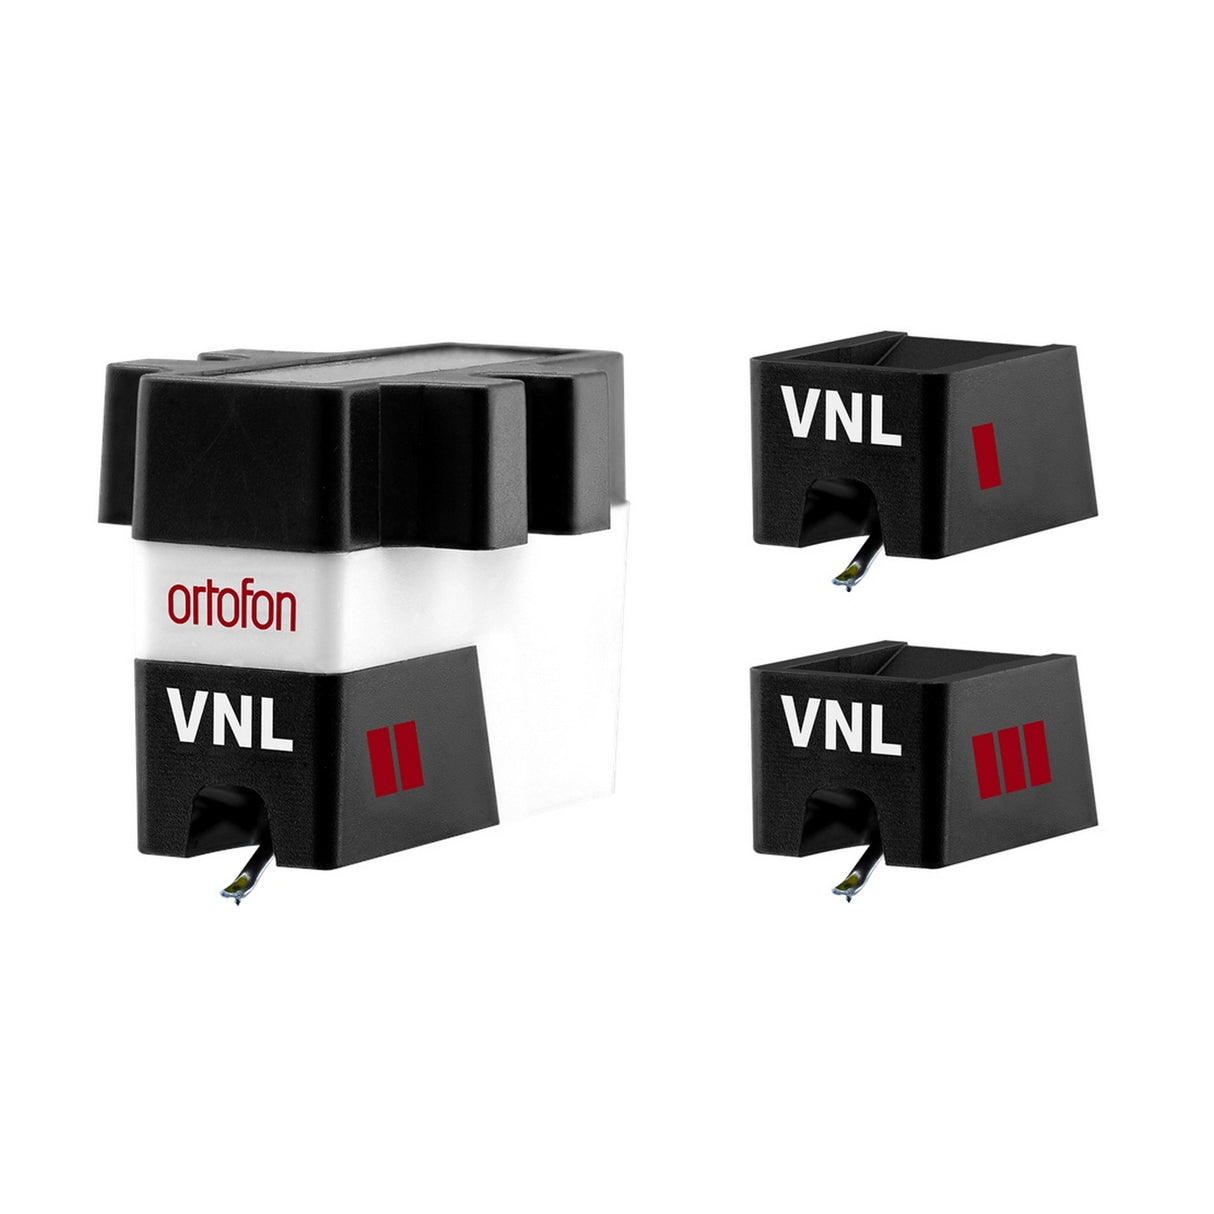 Ortofon VNL Triple Play Cartridge with 3 Styli